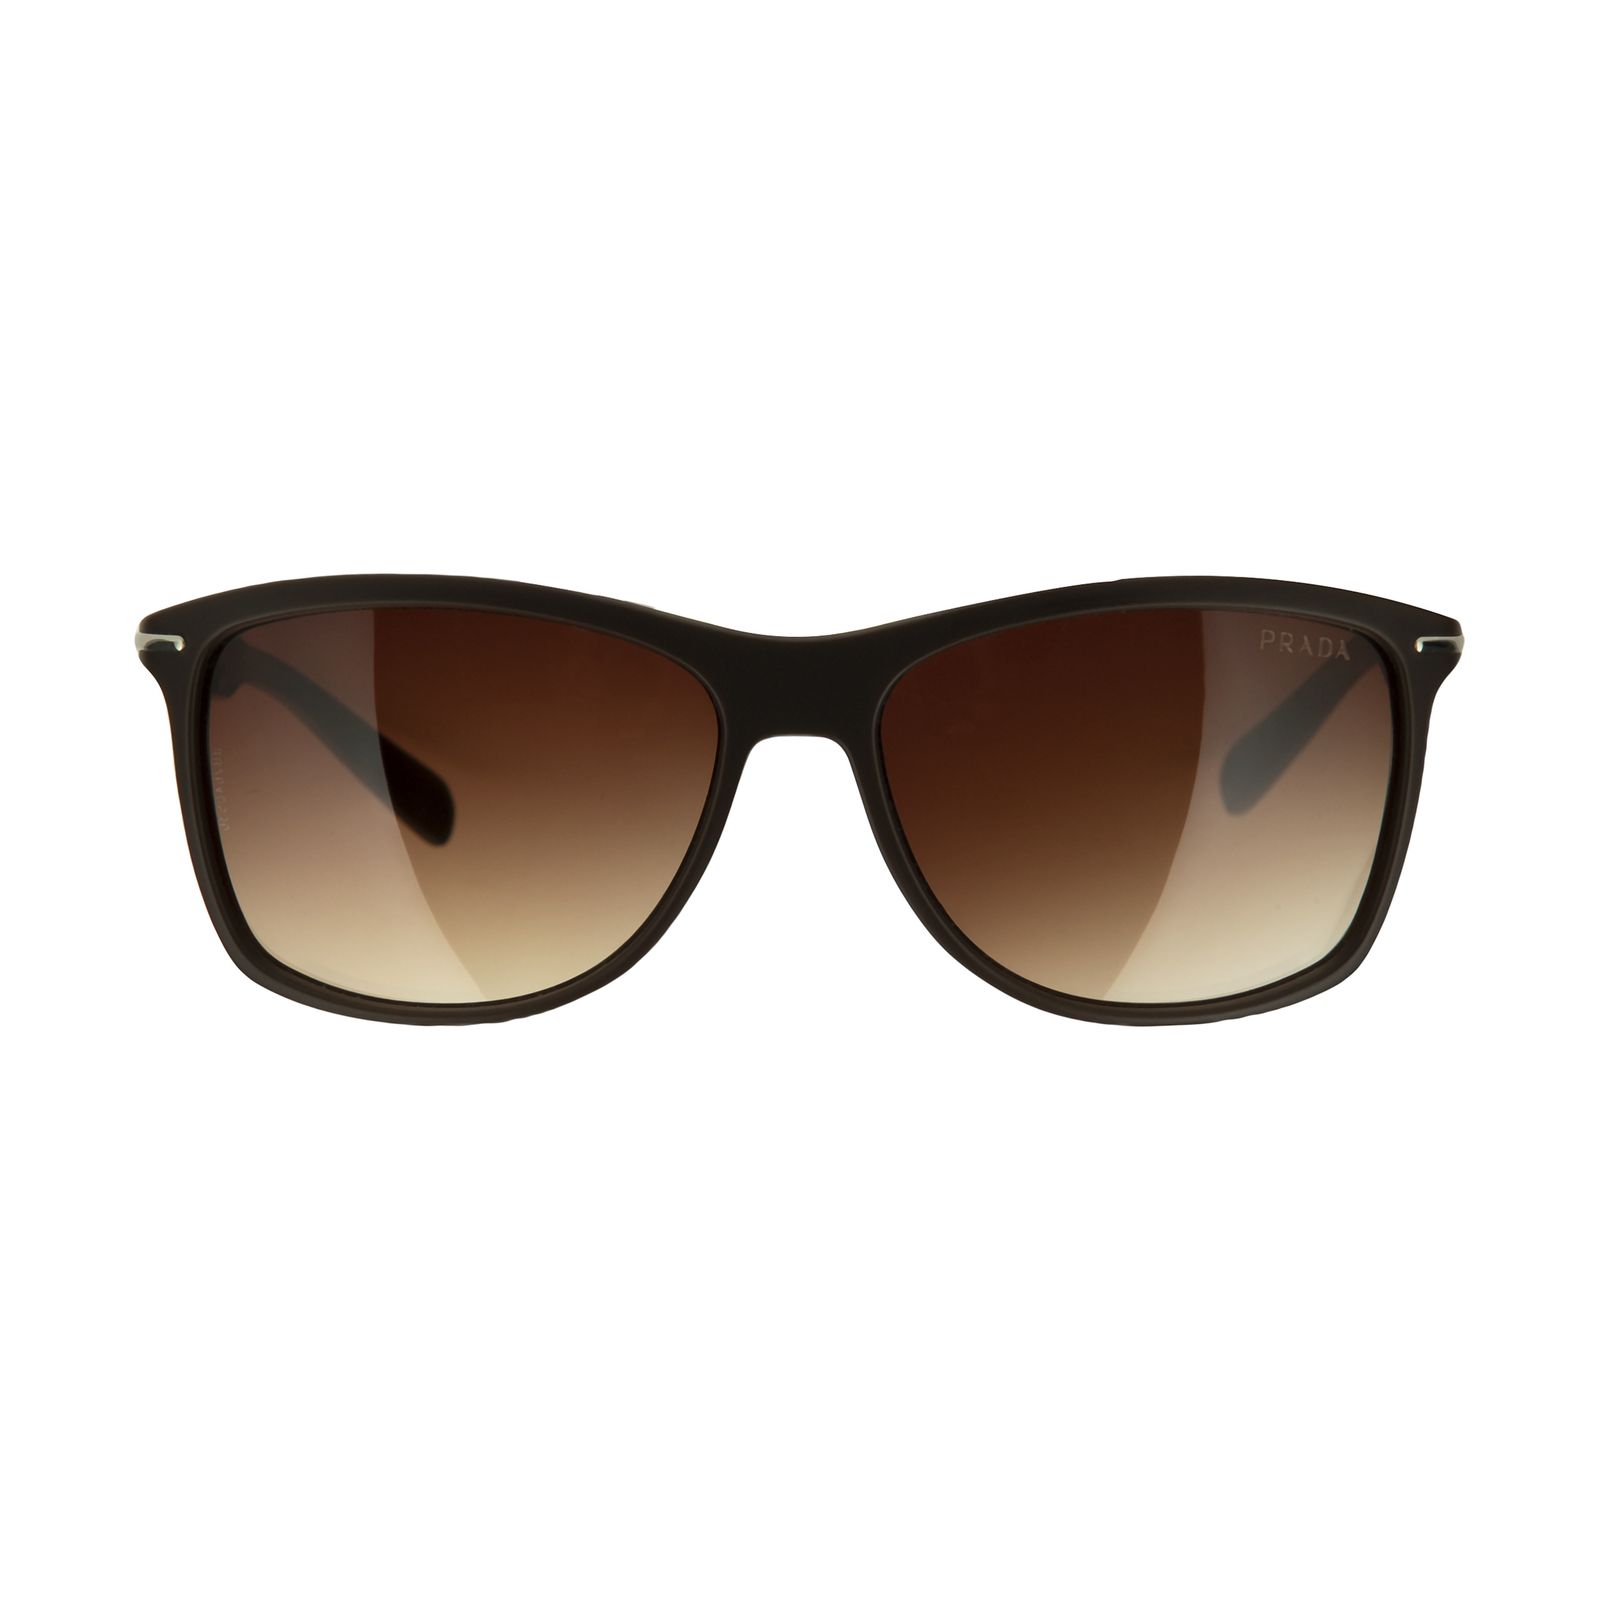  عینک آفتابی پرادا مدل 100 -  - 1